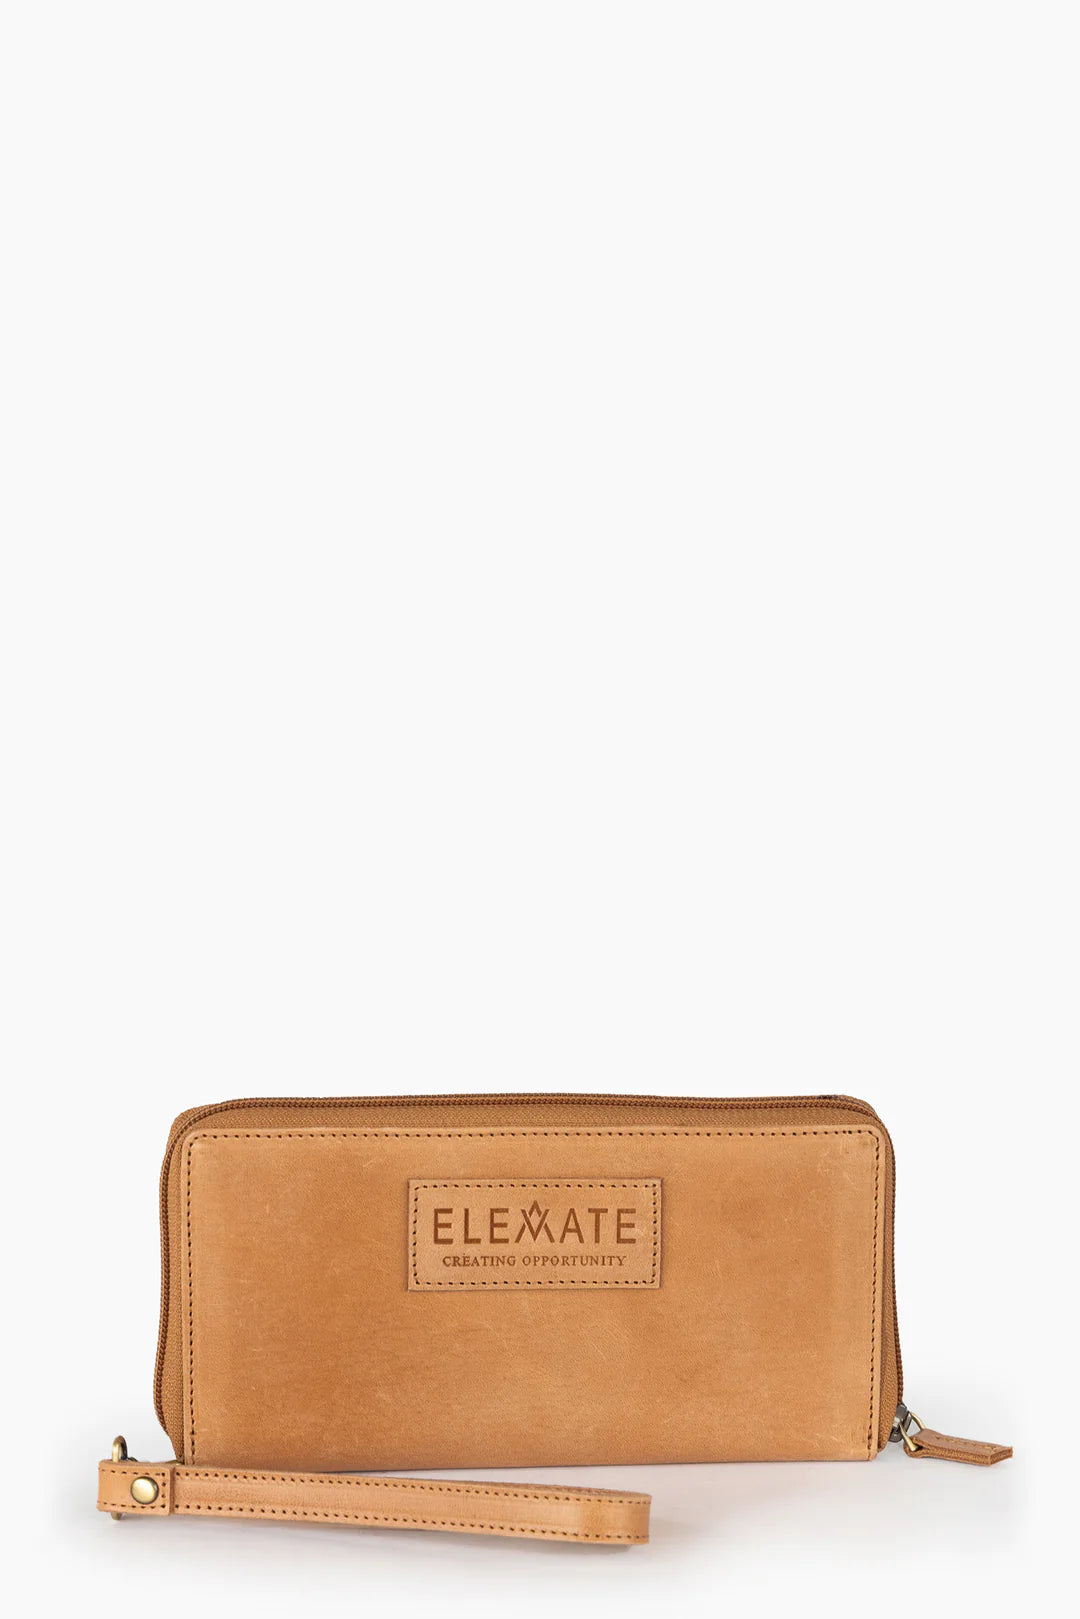 Elevate Genuine Leather Zipper Wallet